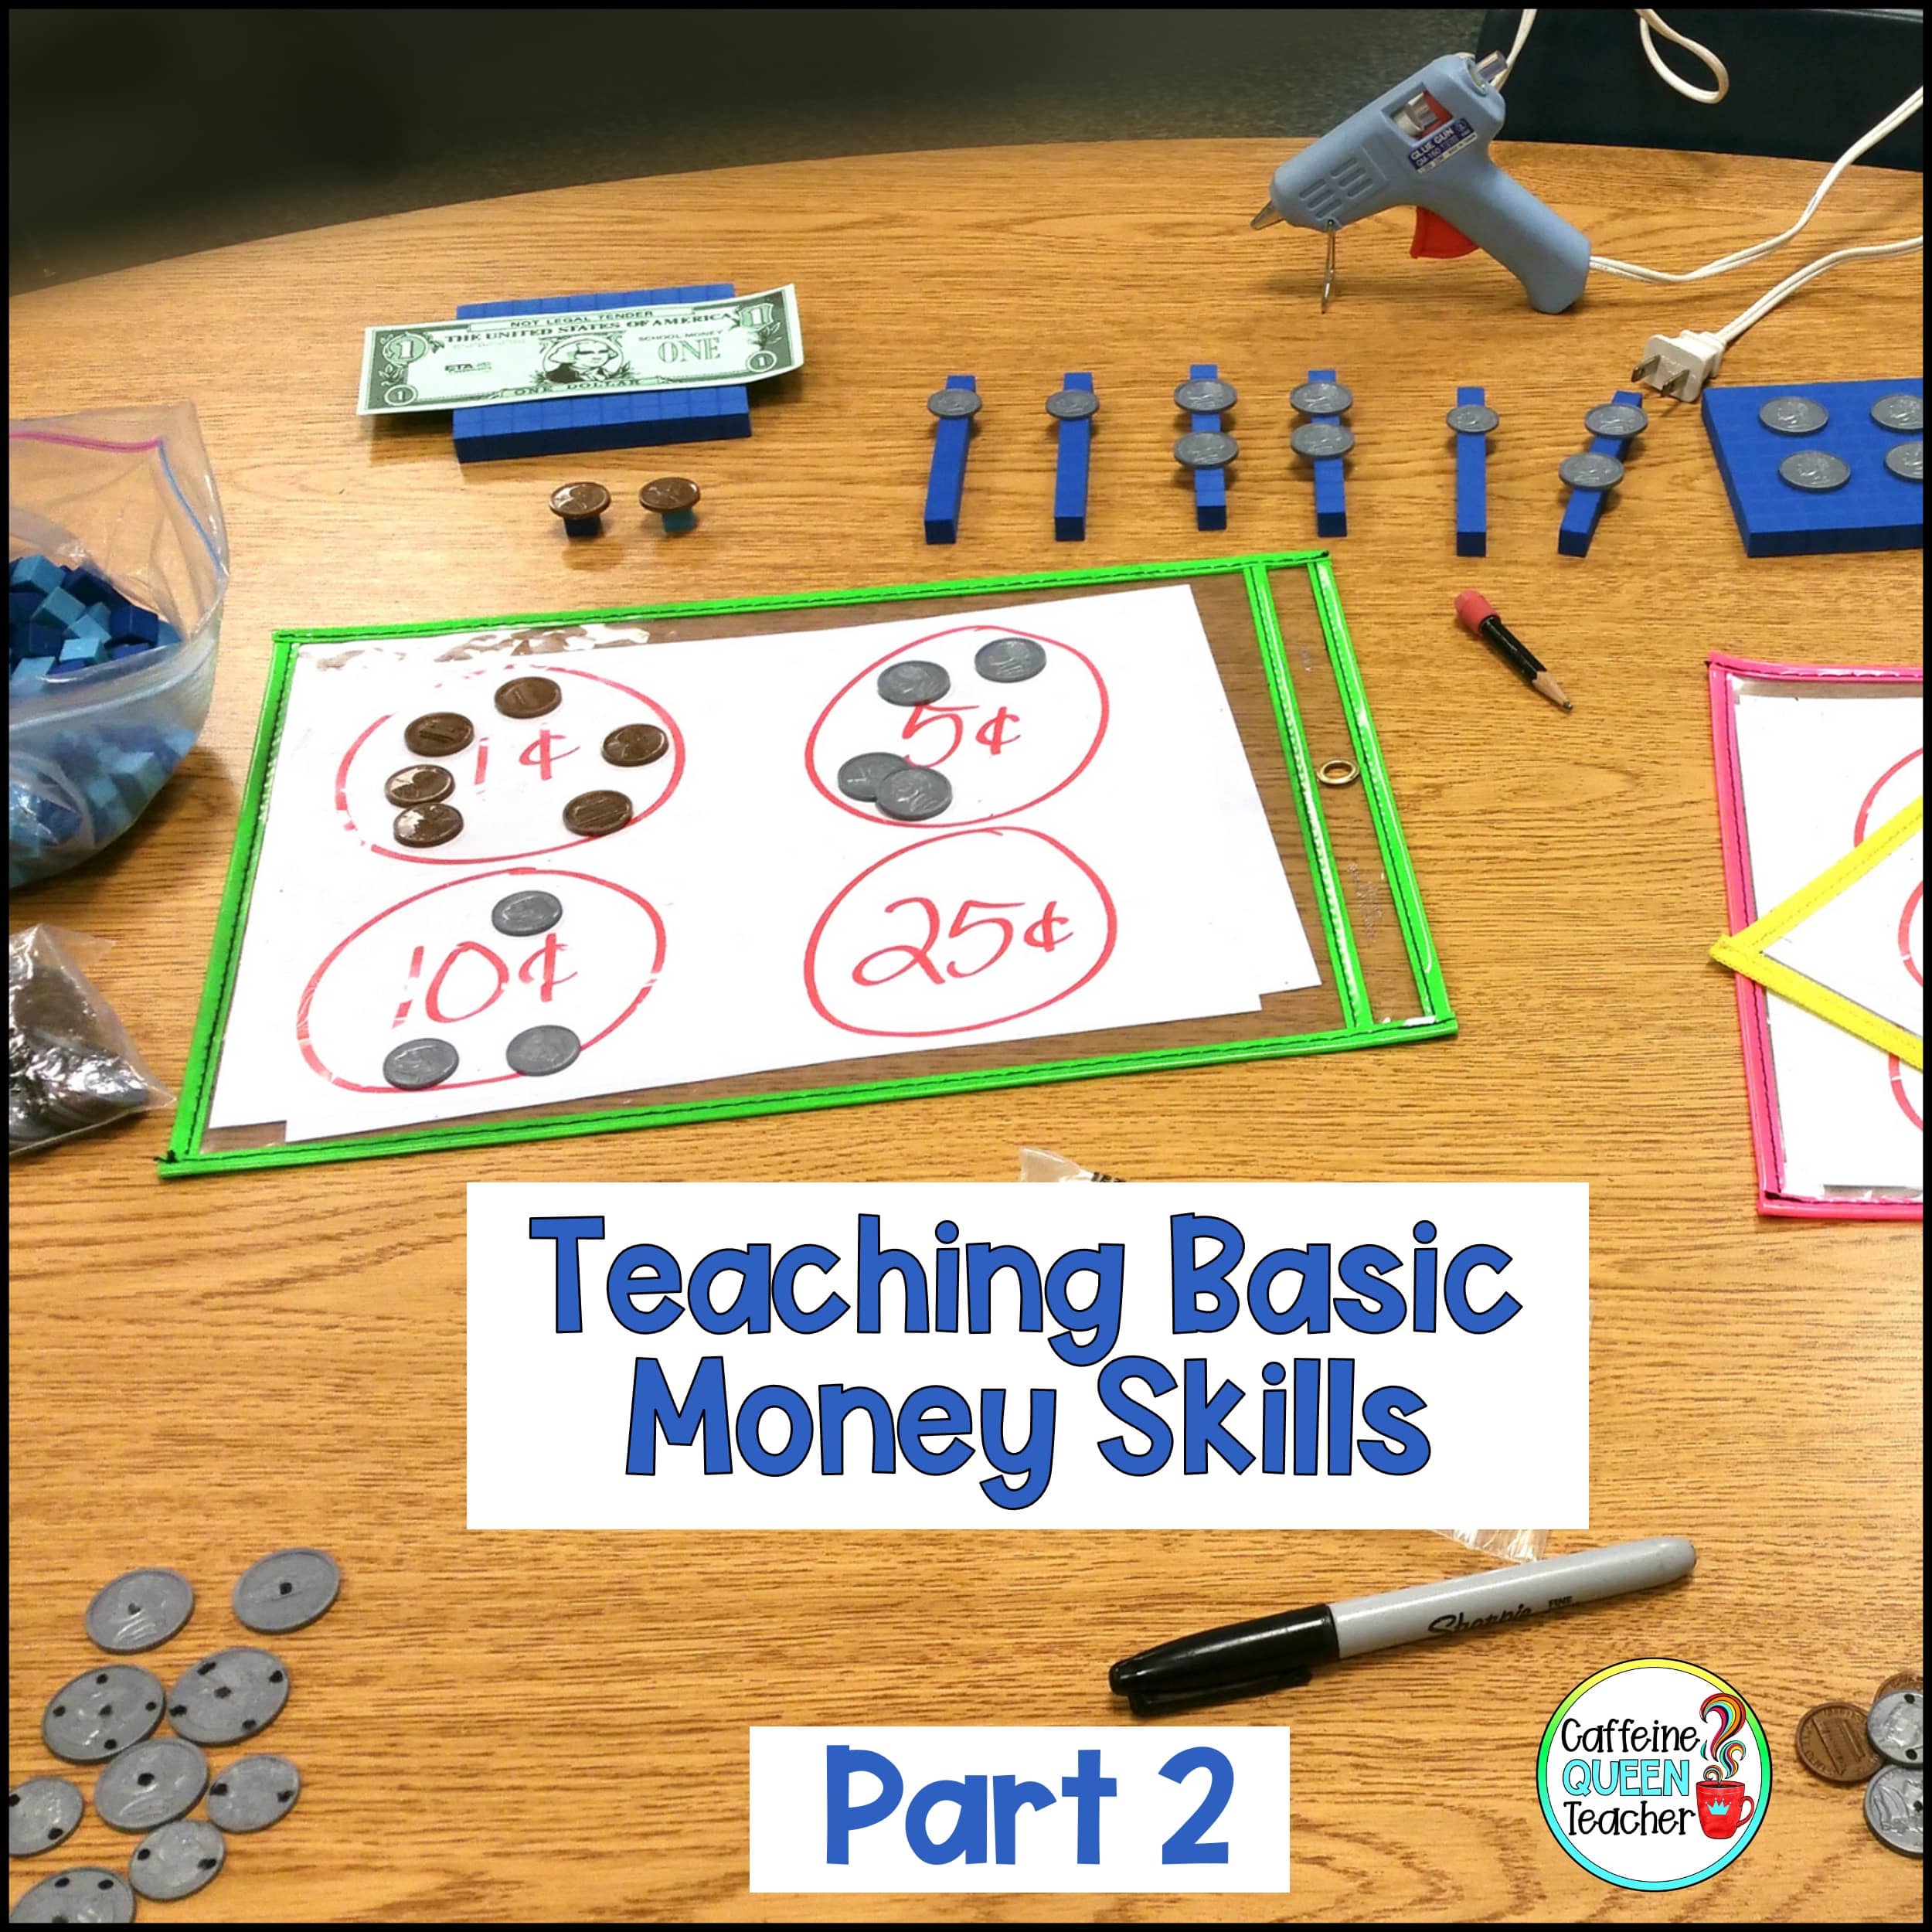 Part 2 of How I Teach Basic Money Skills